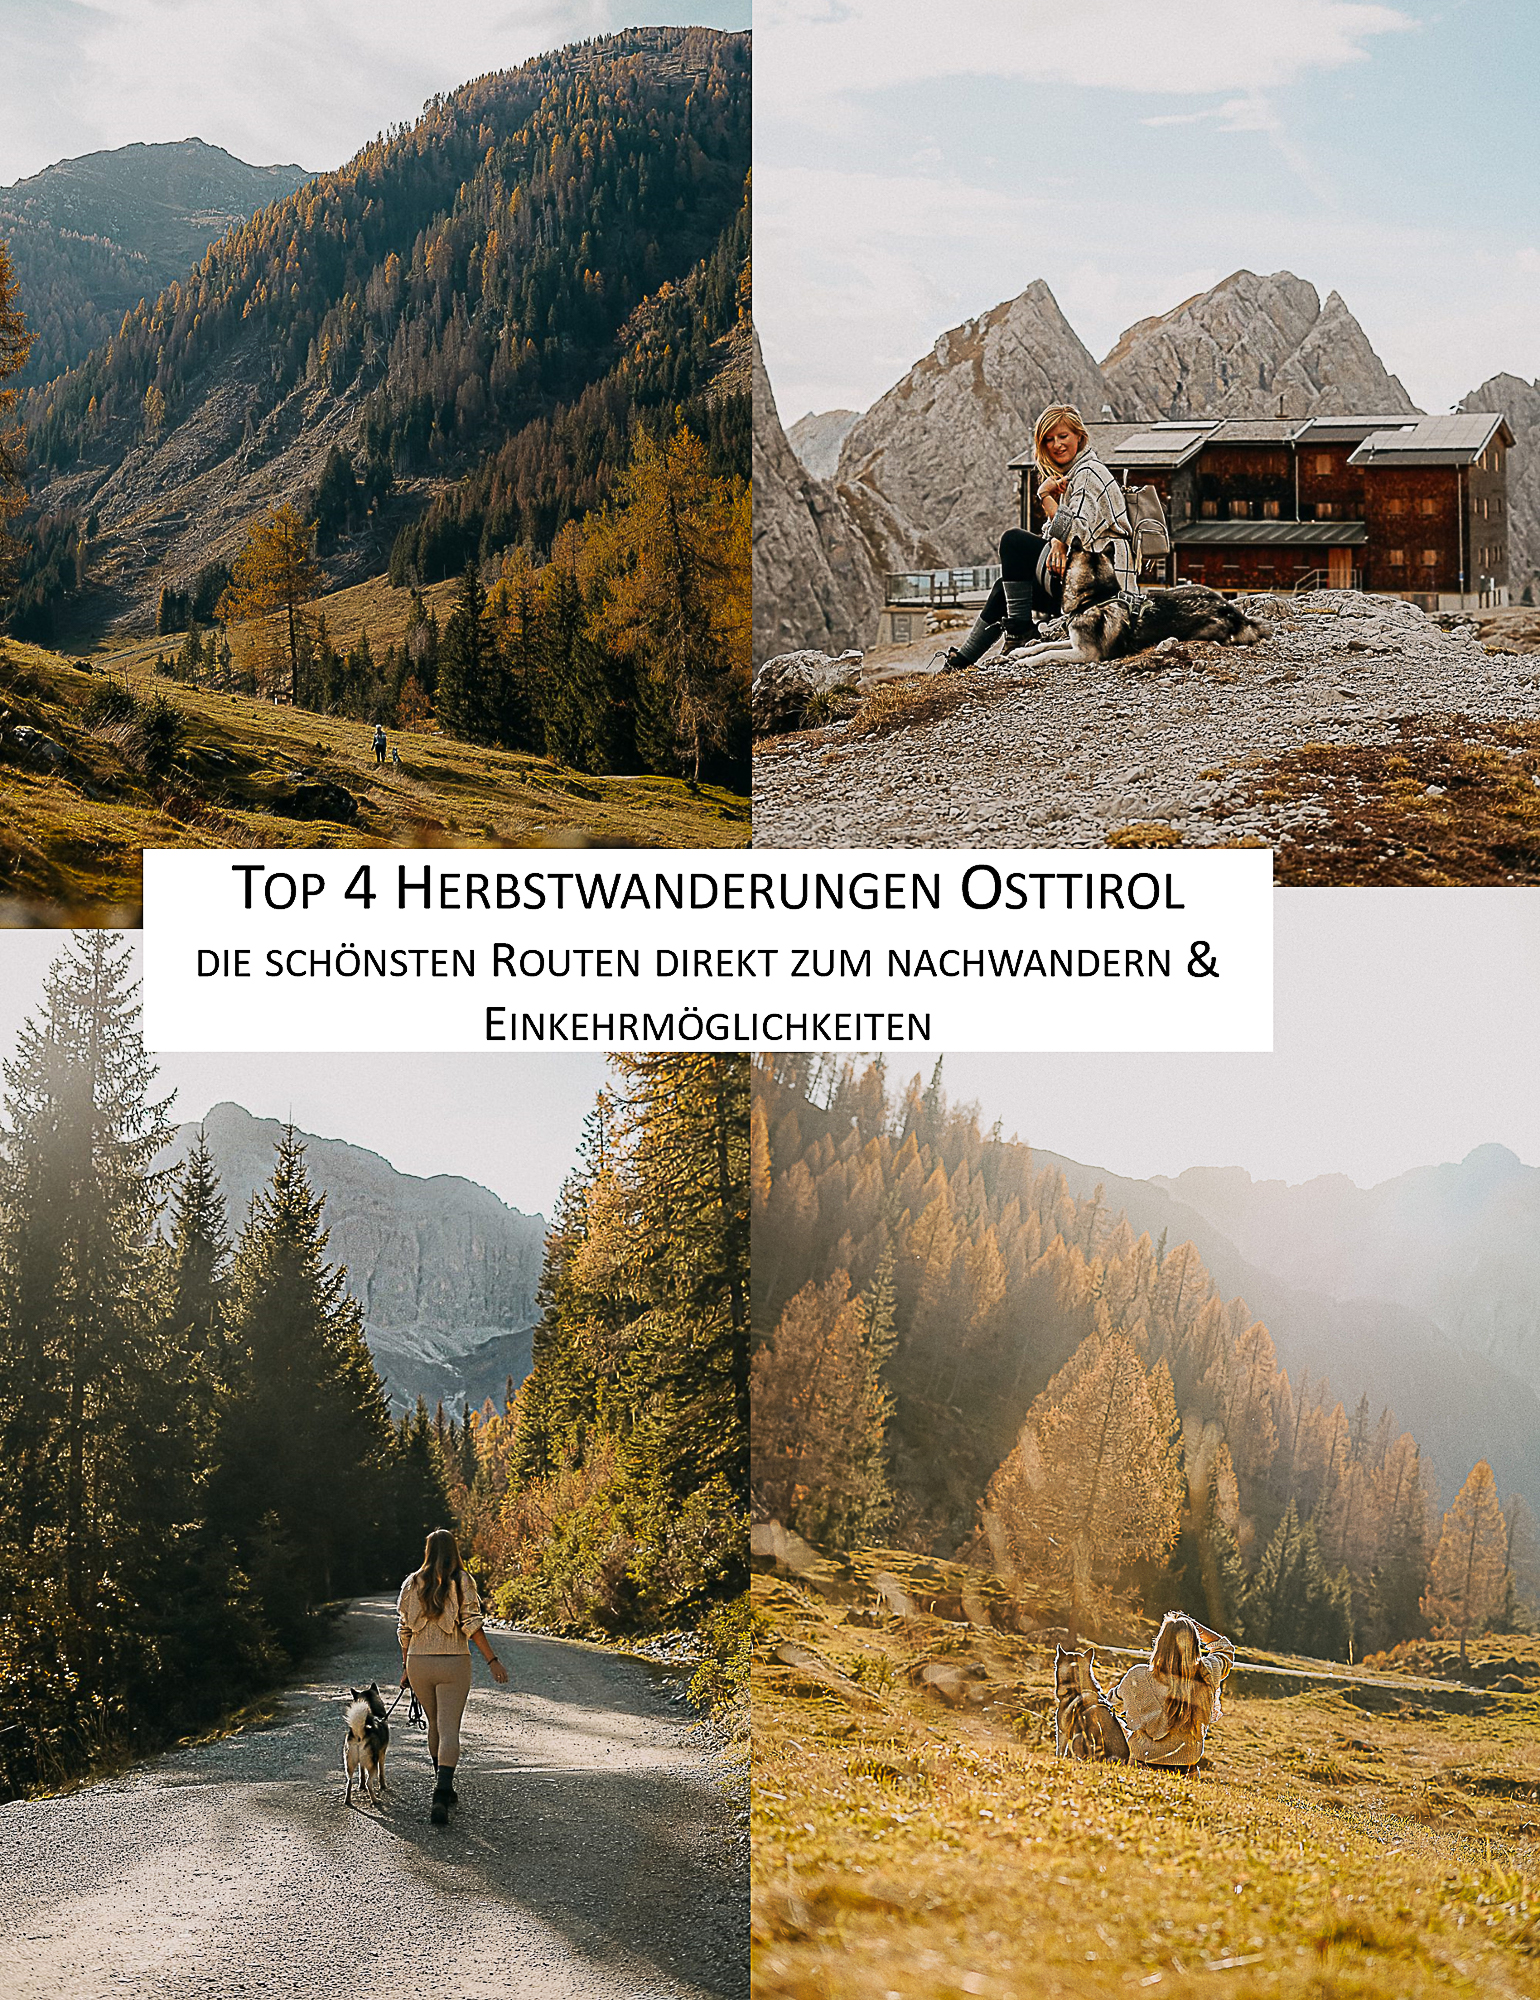 Top 4 Herbstwanderungen Osttirol Routen Wandertipps Reiseblog